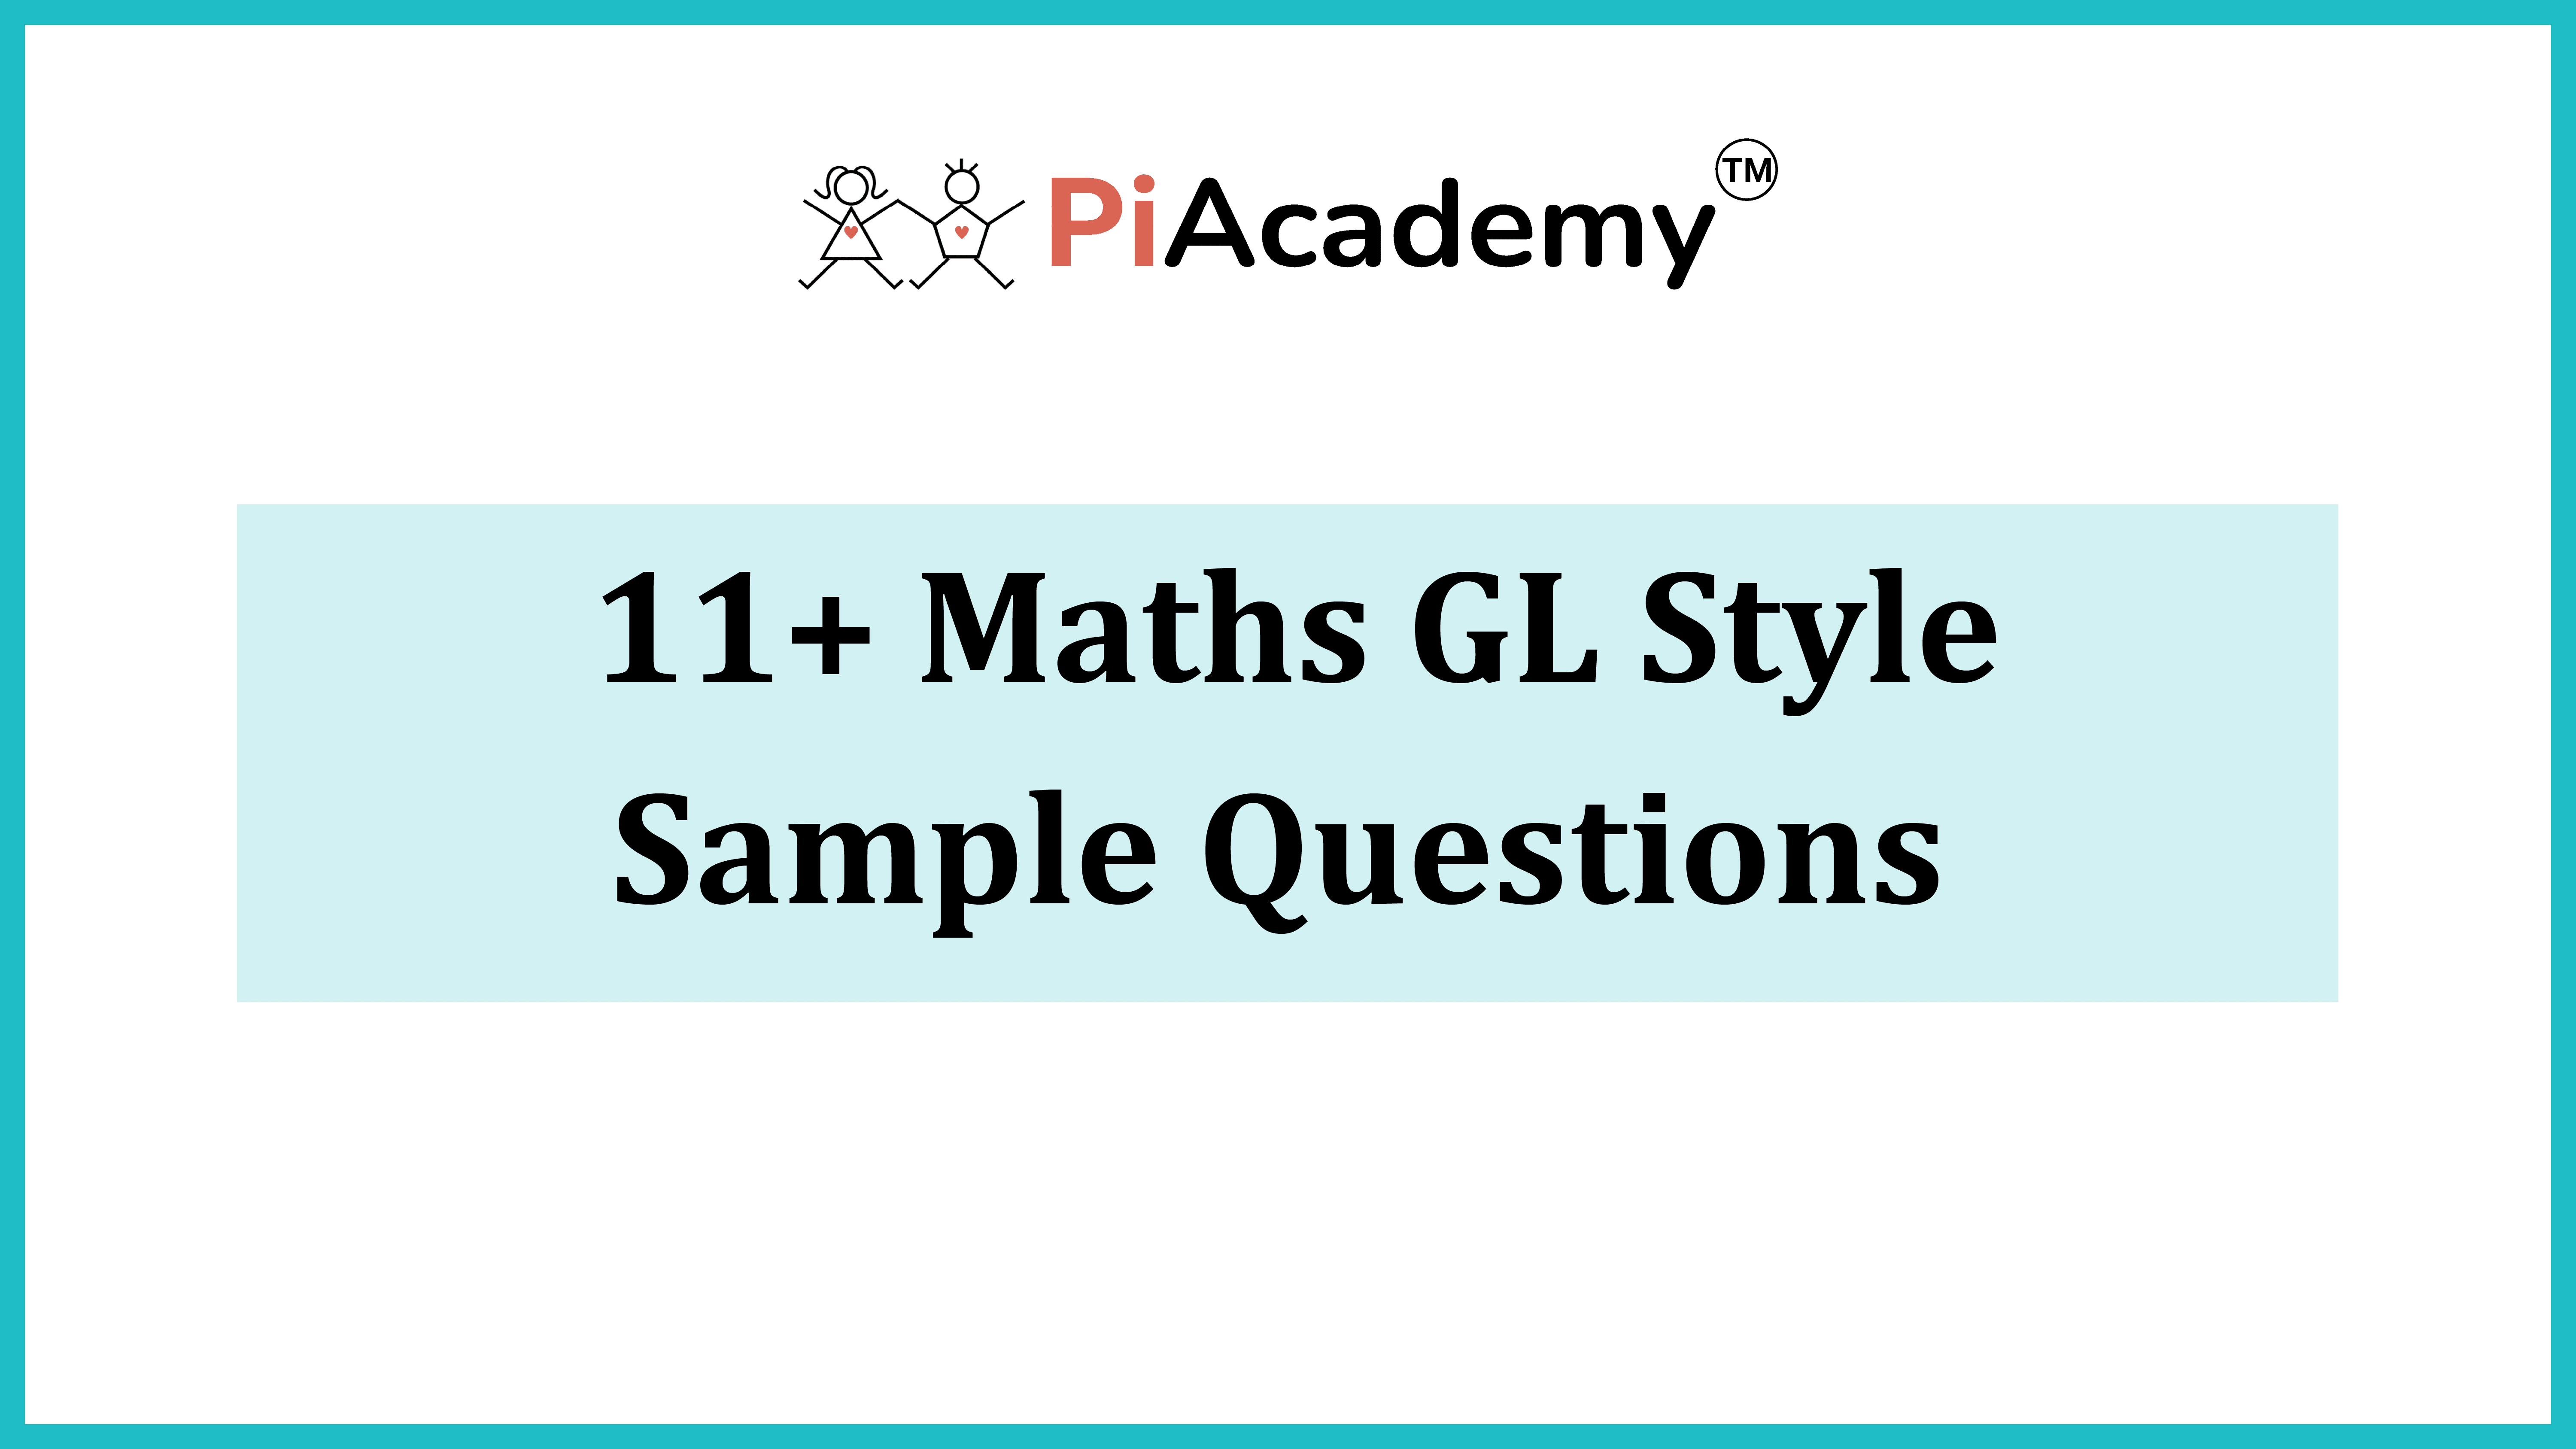 11+ GL Article Maths Title